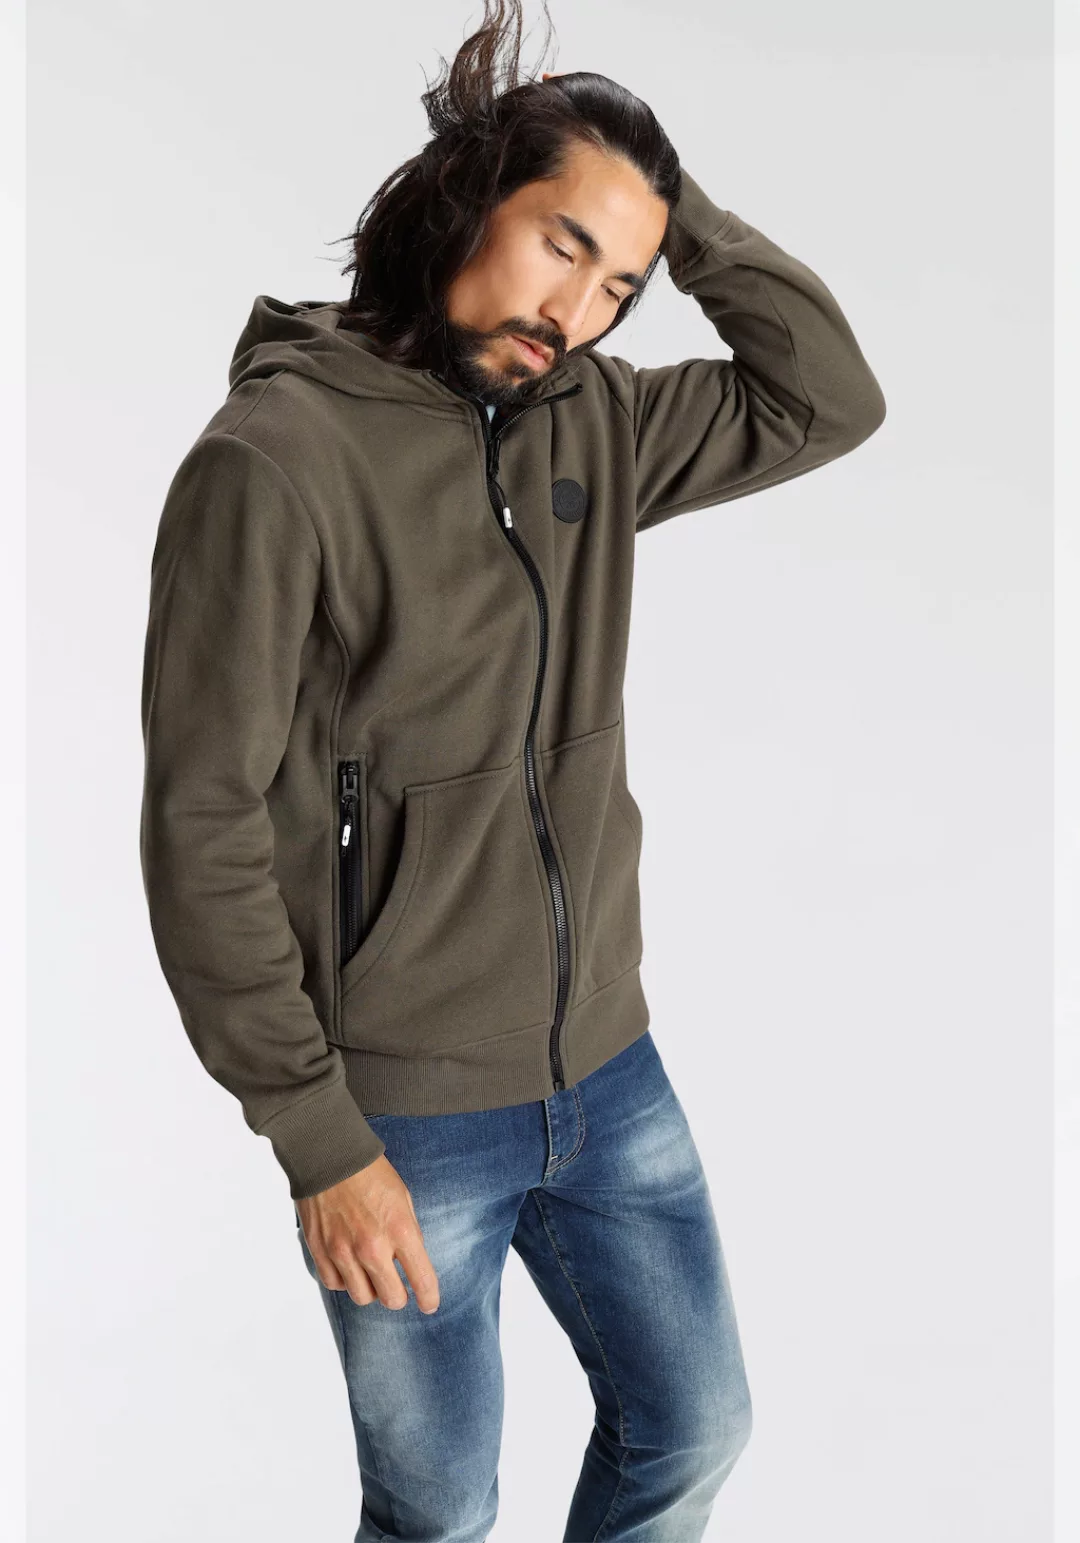 KangaROOS Kapuzensweatshirt Jacke mit Kapuze günstig online kaufen